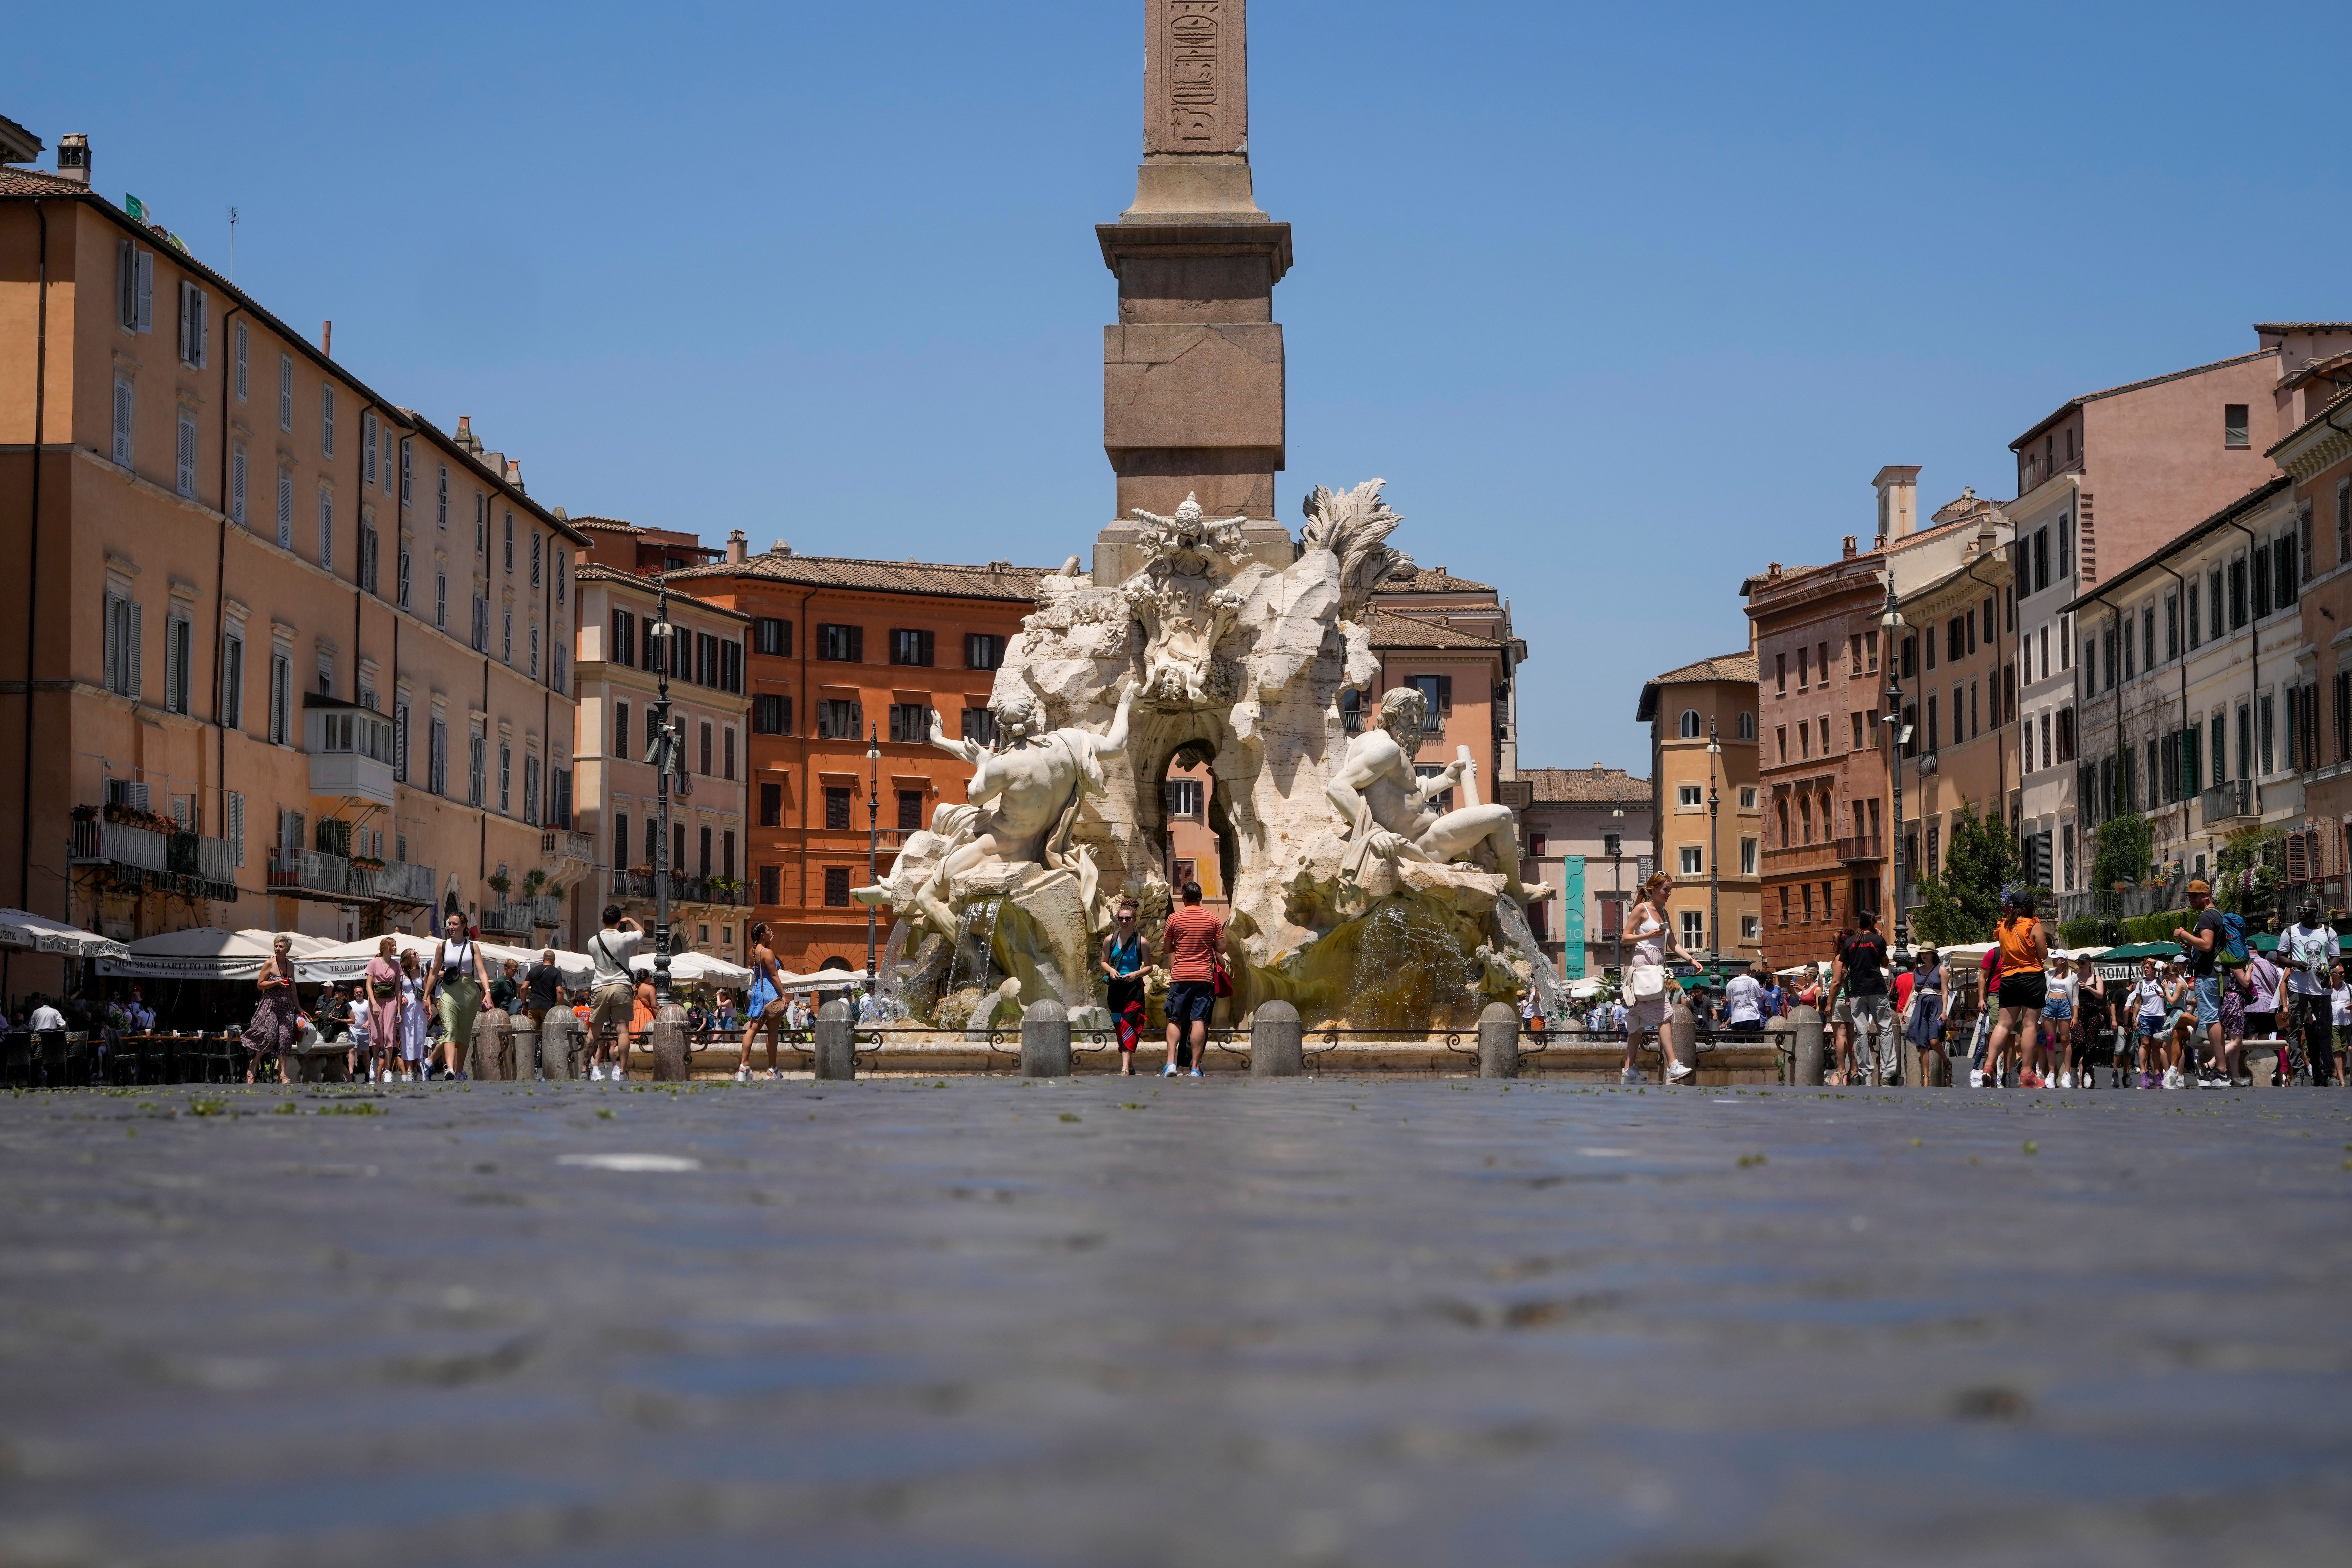 Rome’s historical Piazza Navona square